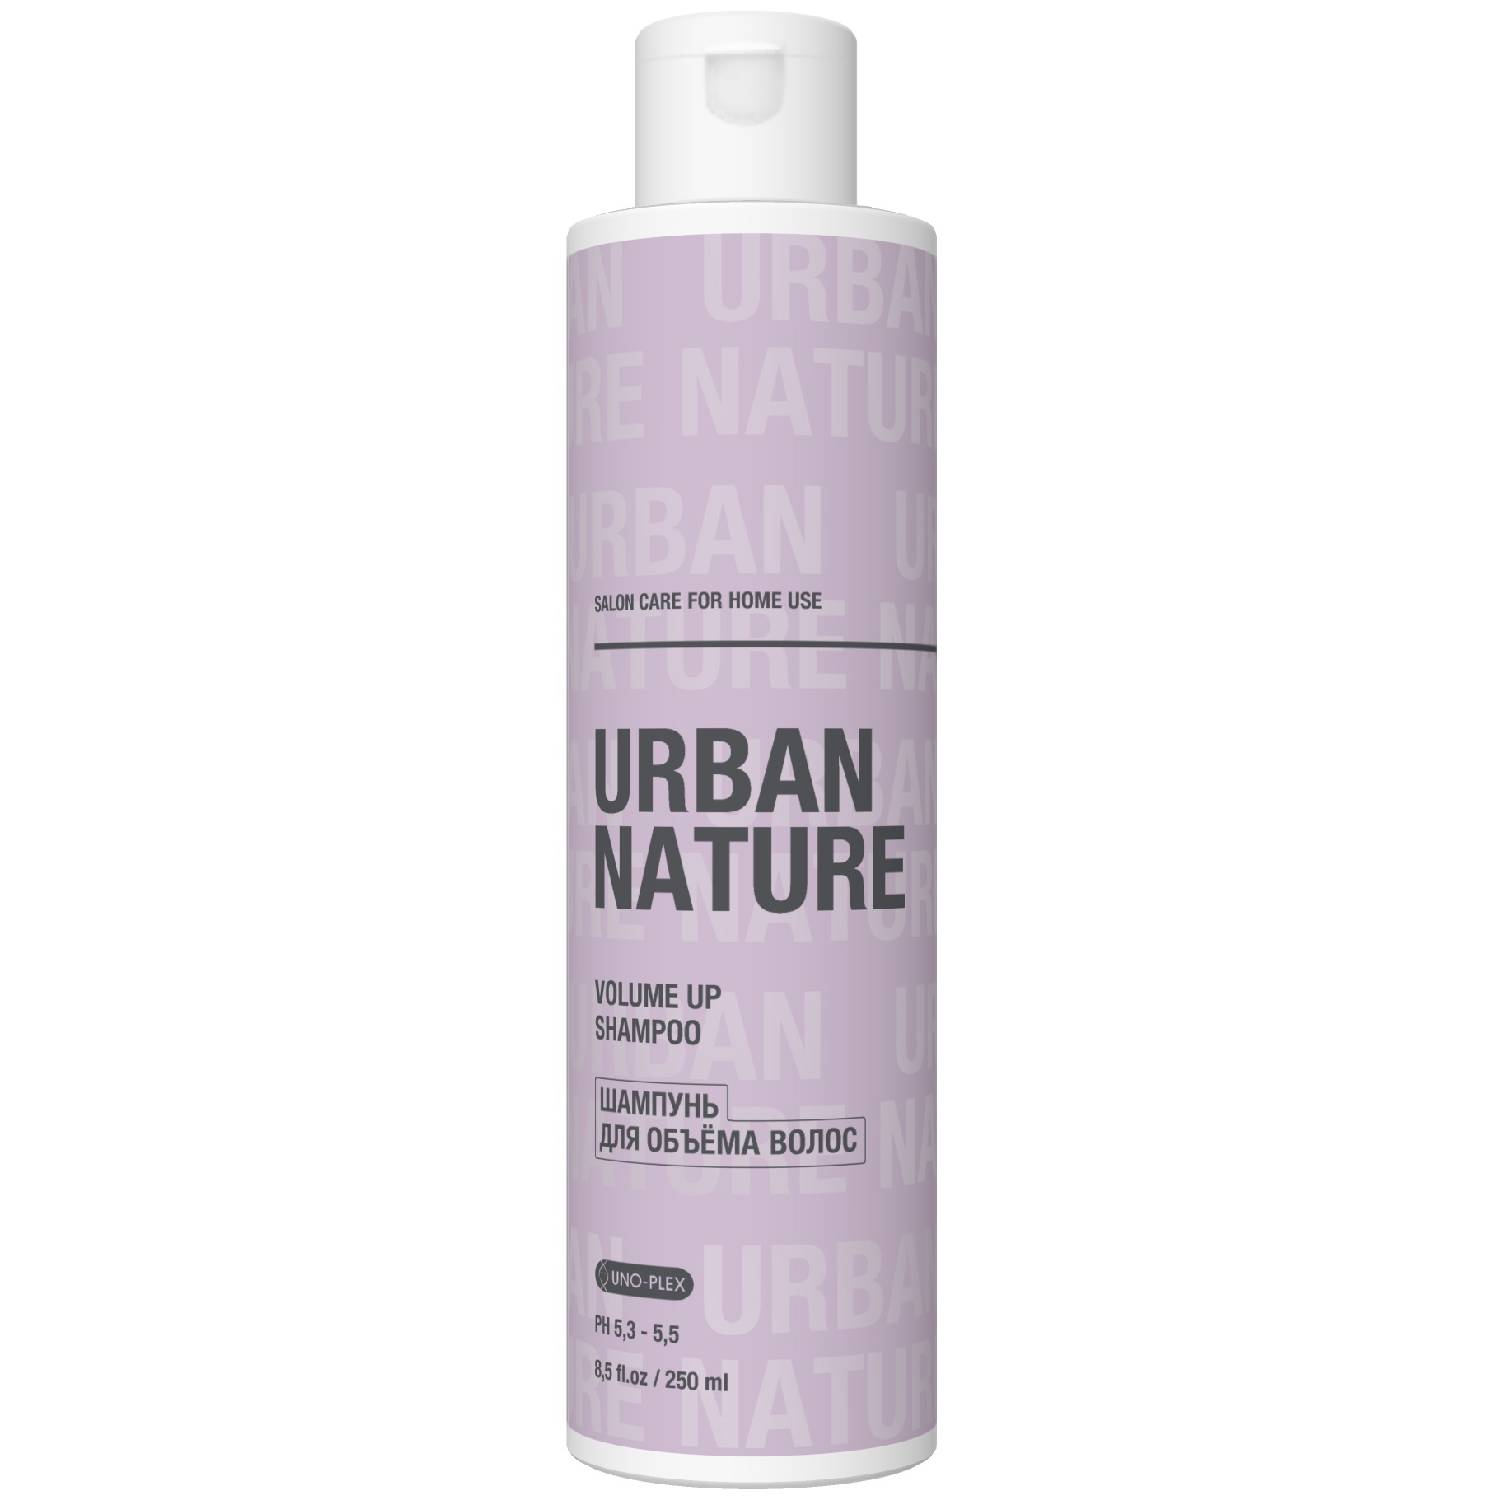 Urban Nature Шампунь для объема волос, 250 мл (Urban Nature, Volume Up)